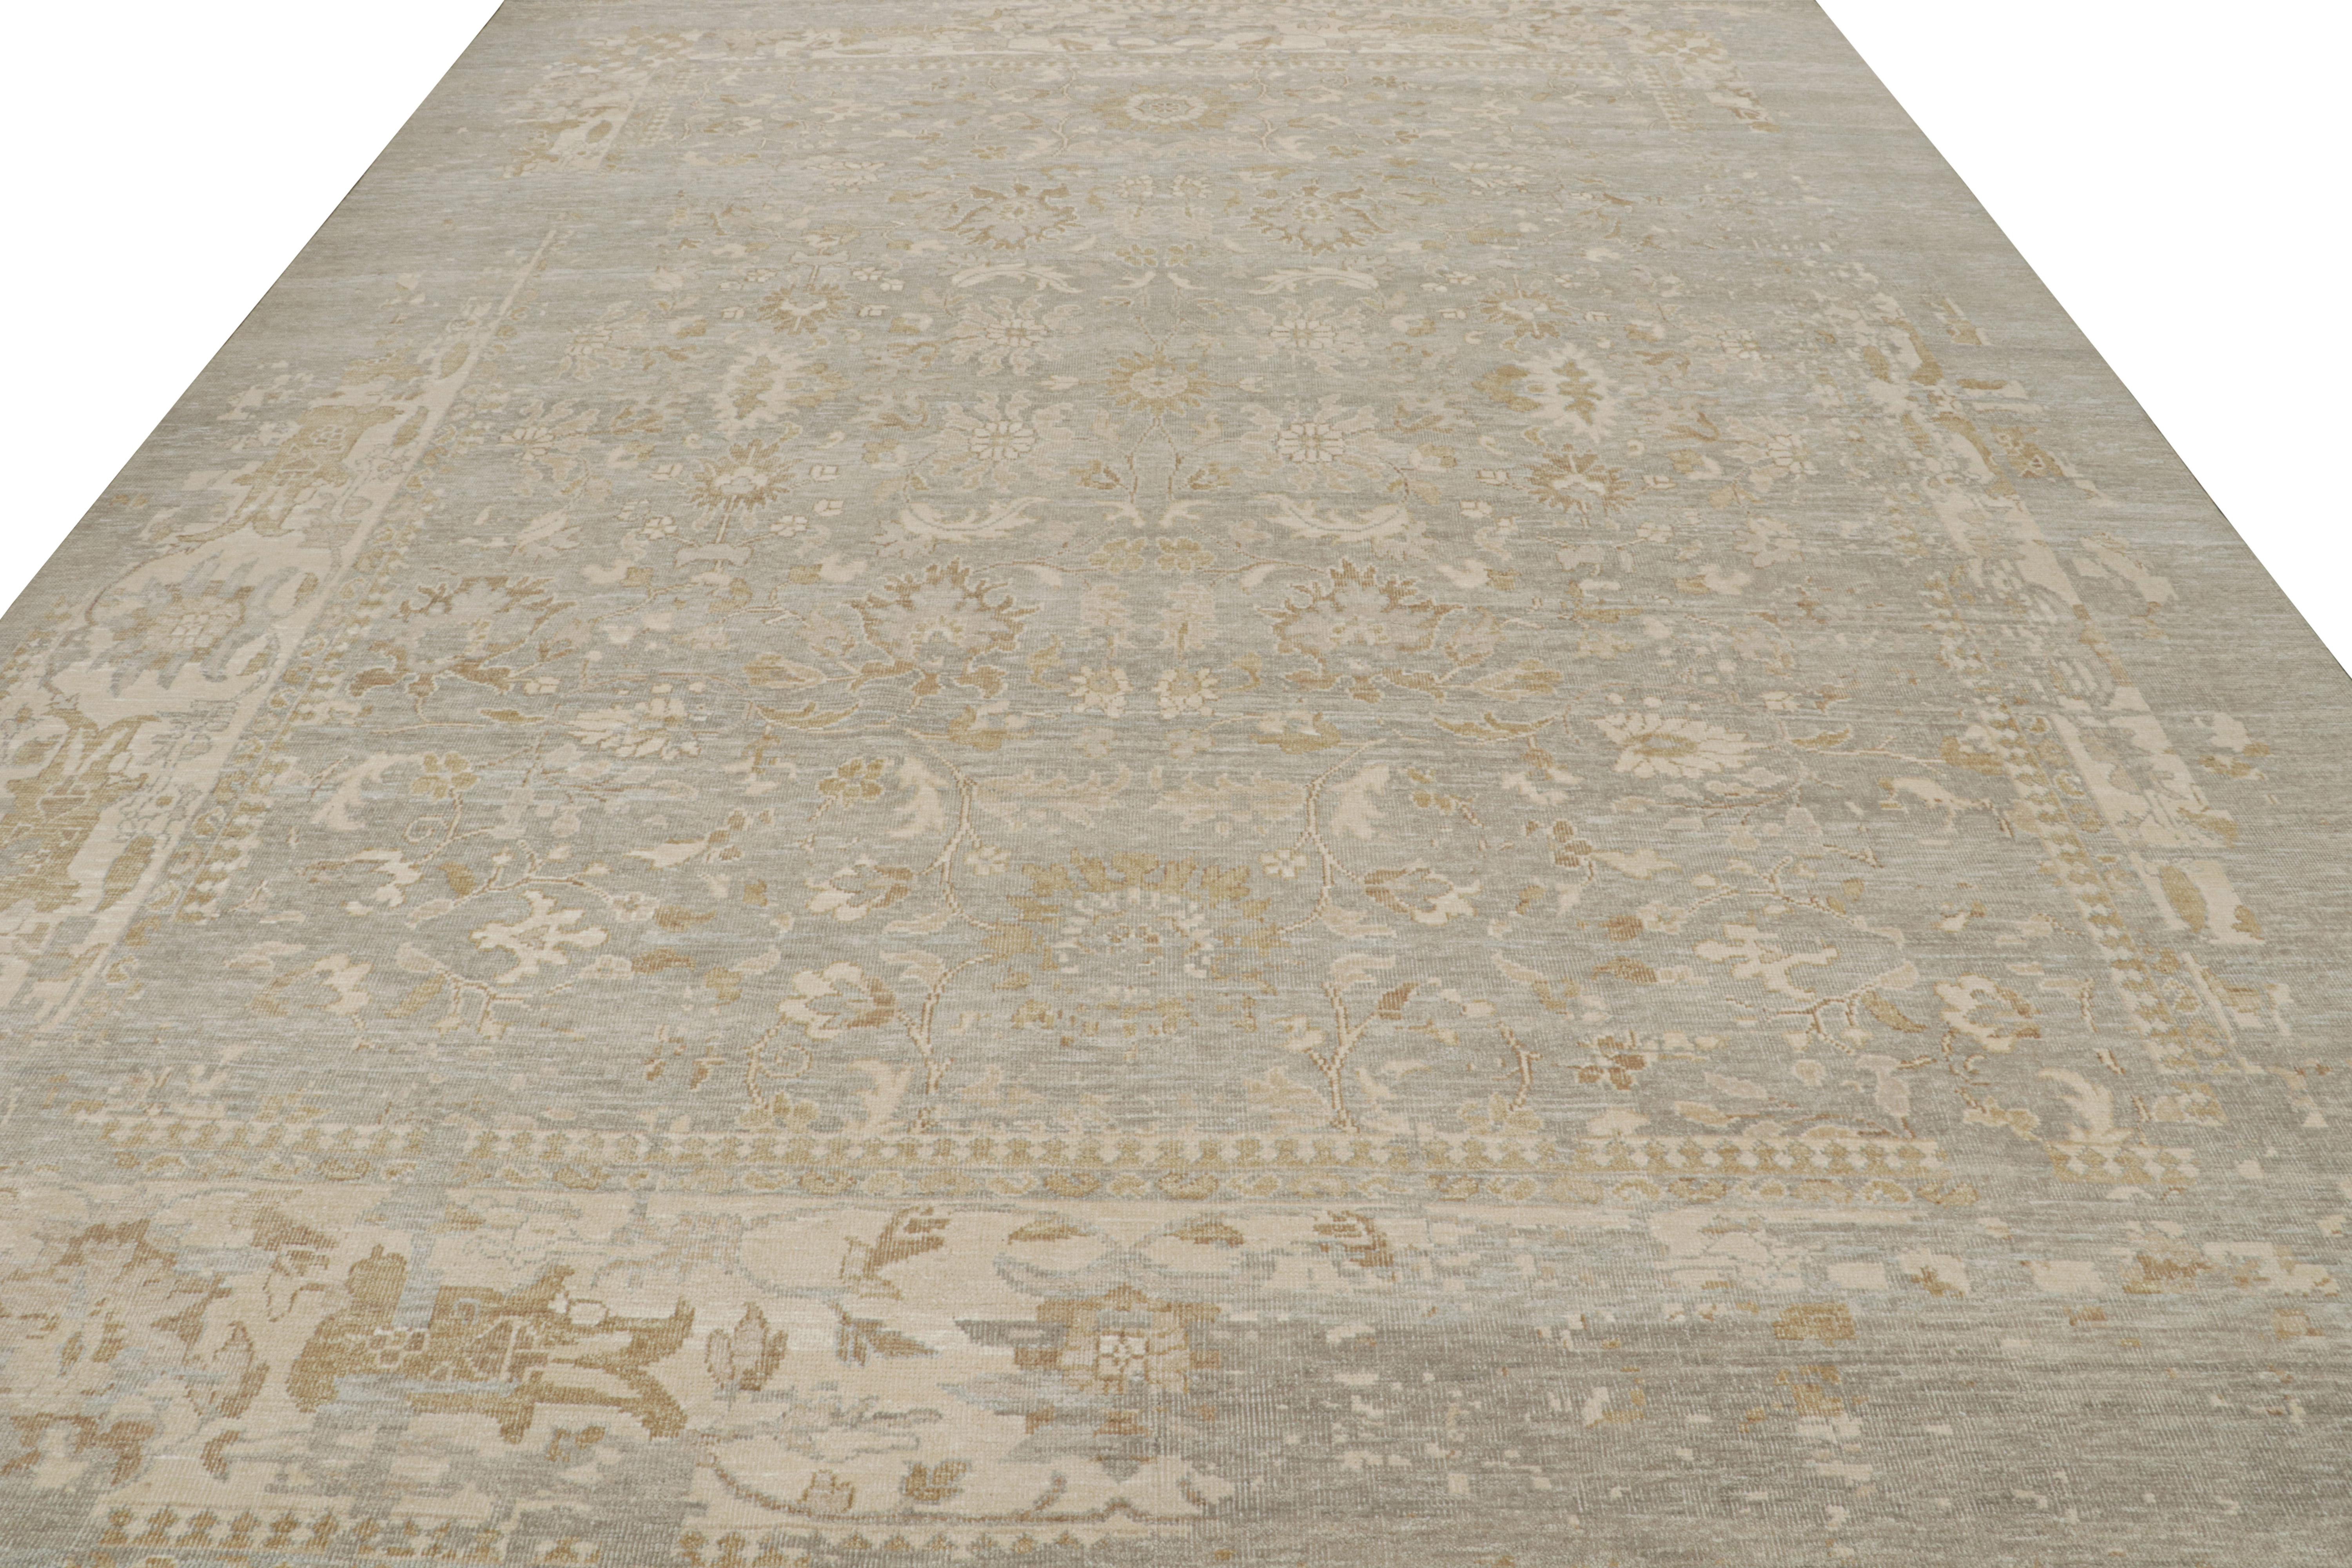 Indian Rug & Kilim’s Oushak style rug in Grey & Beige-Brown Floral Patterns For Sale